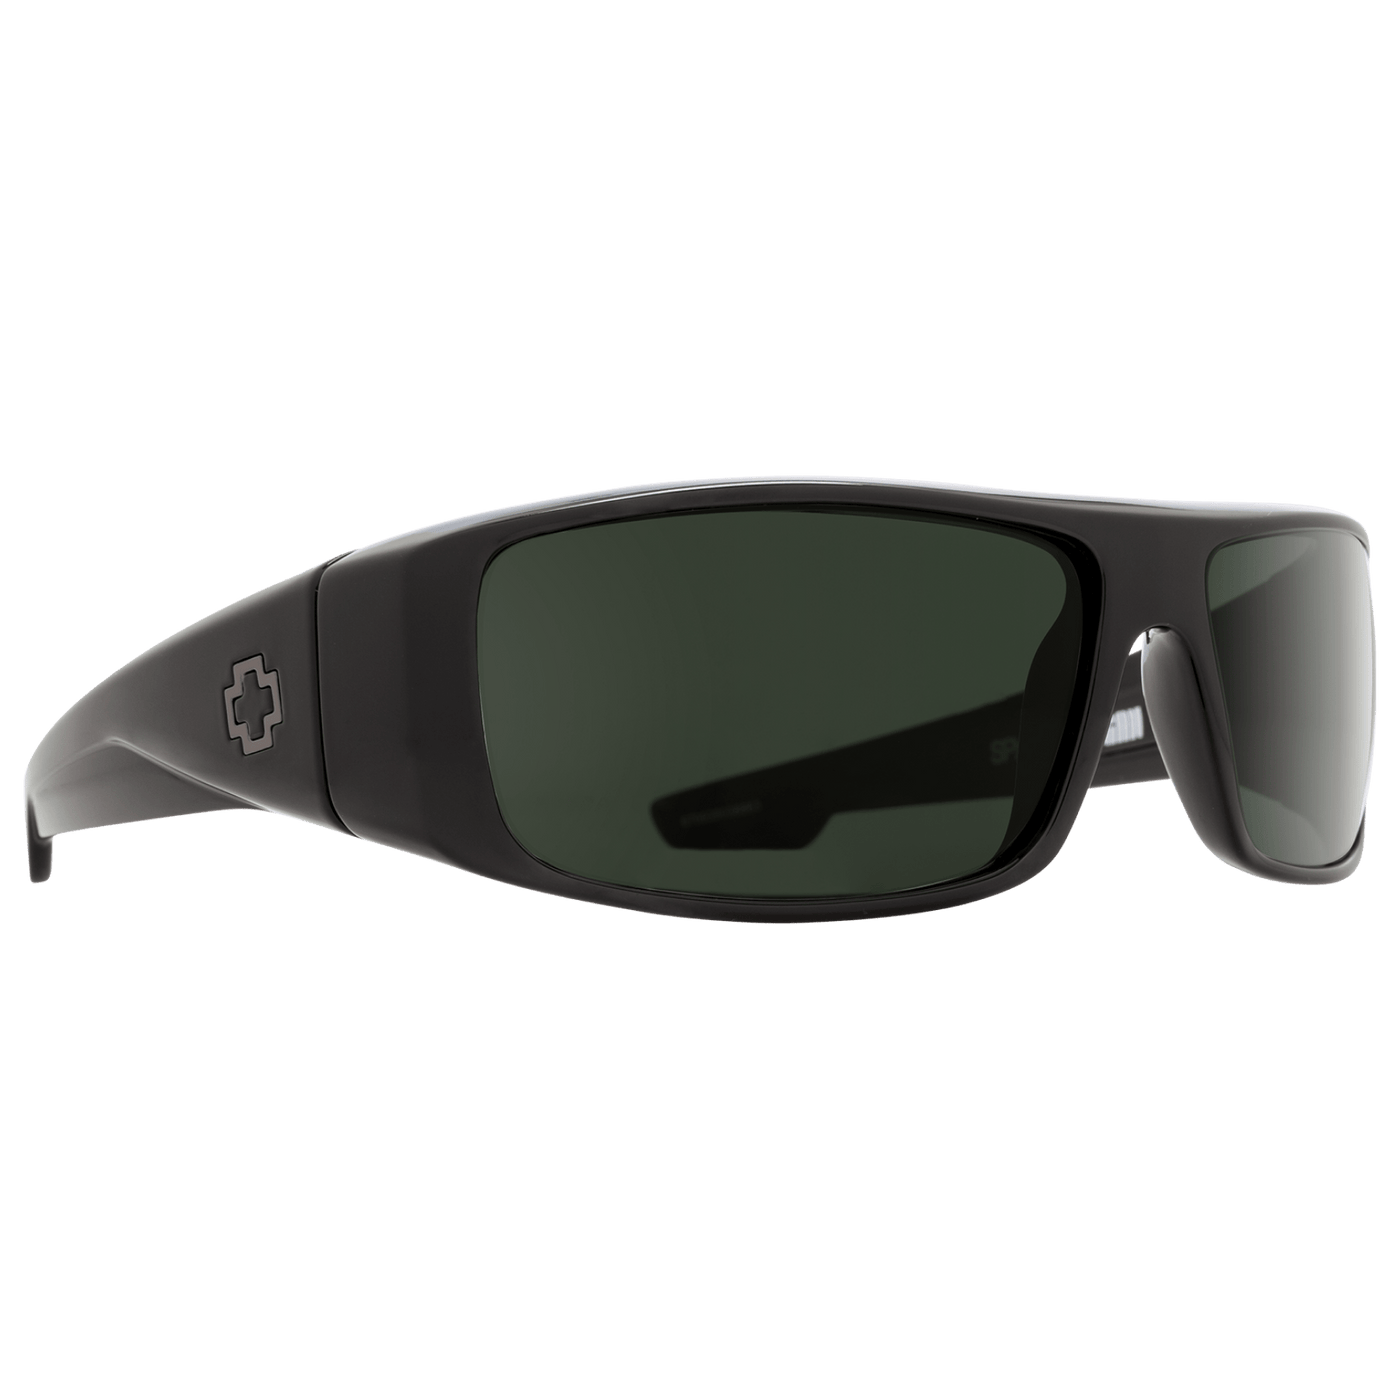 SPY LOGAN Sunglasses, Happy Lens - Black 8Lines Shop - Fast Shipping